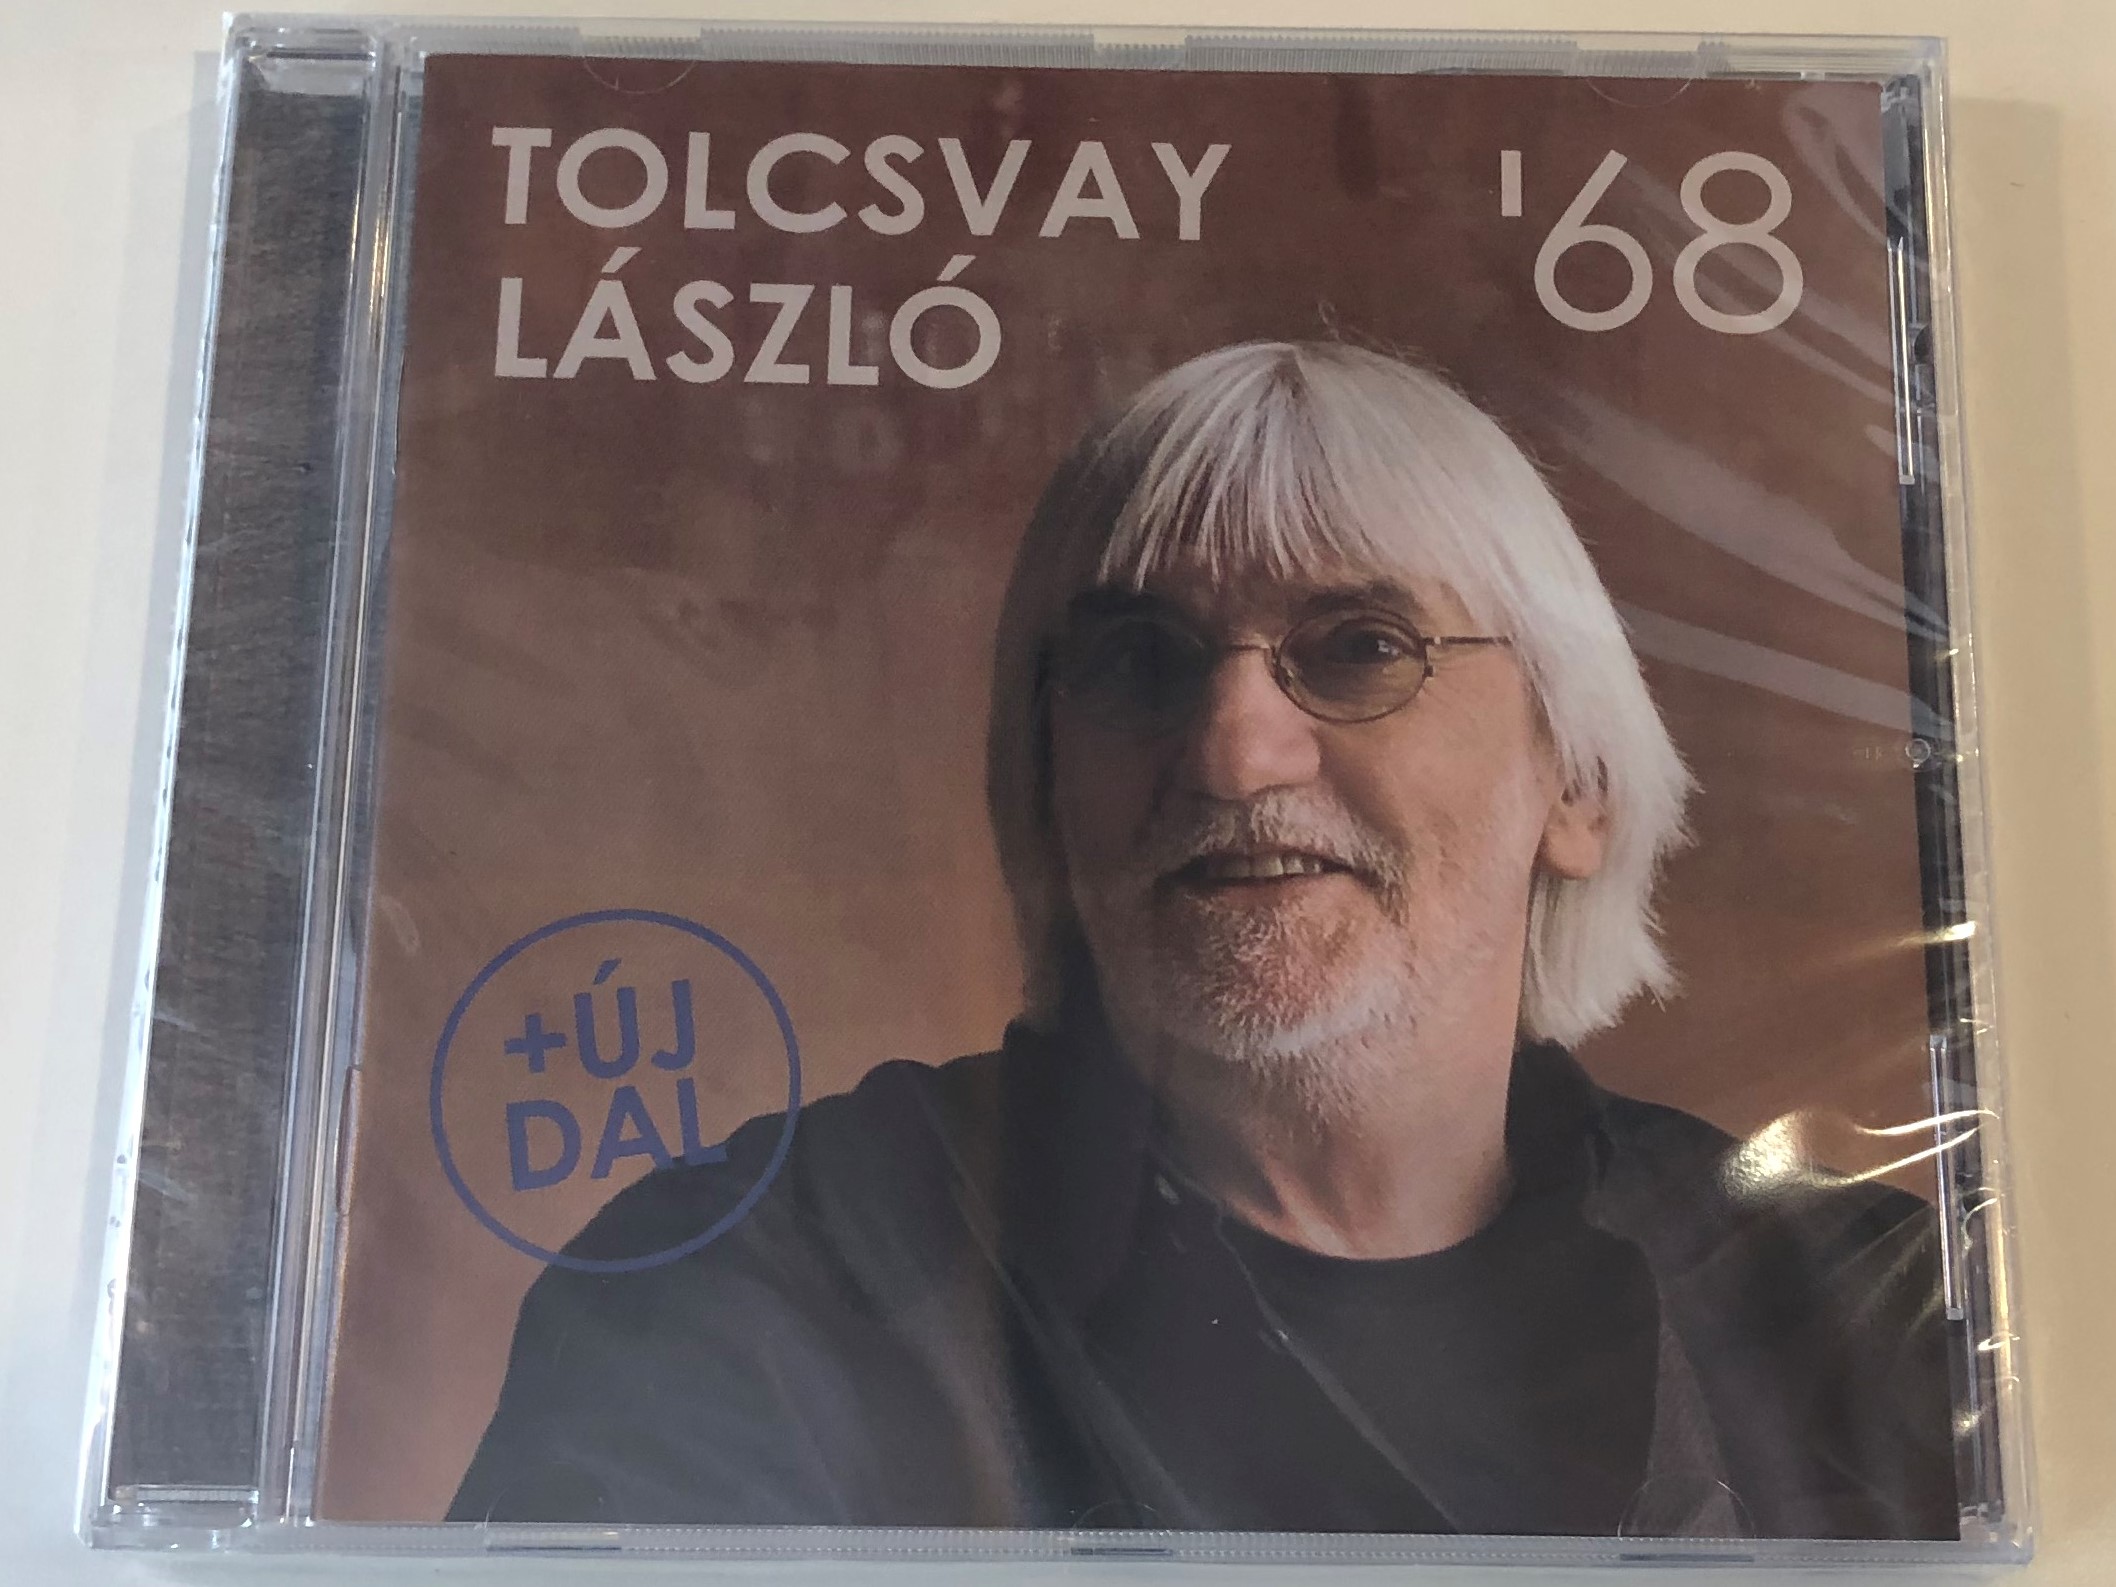 tolcsvay-l-szl-68-grundrecords-audio-cd-2018-gr108-1-.jpg